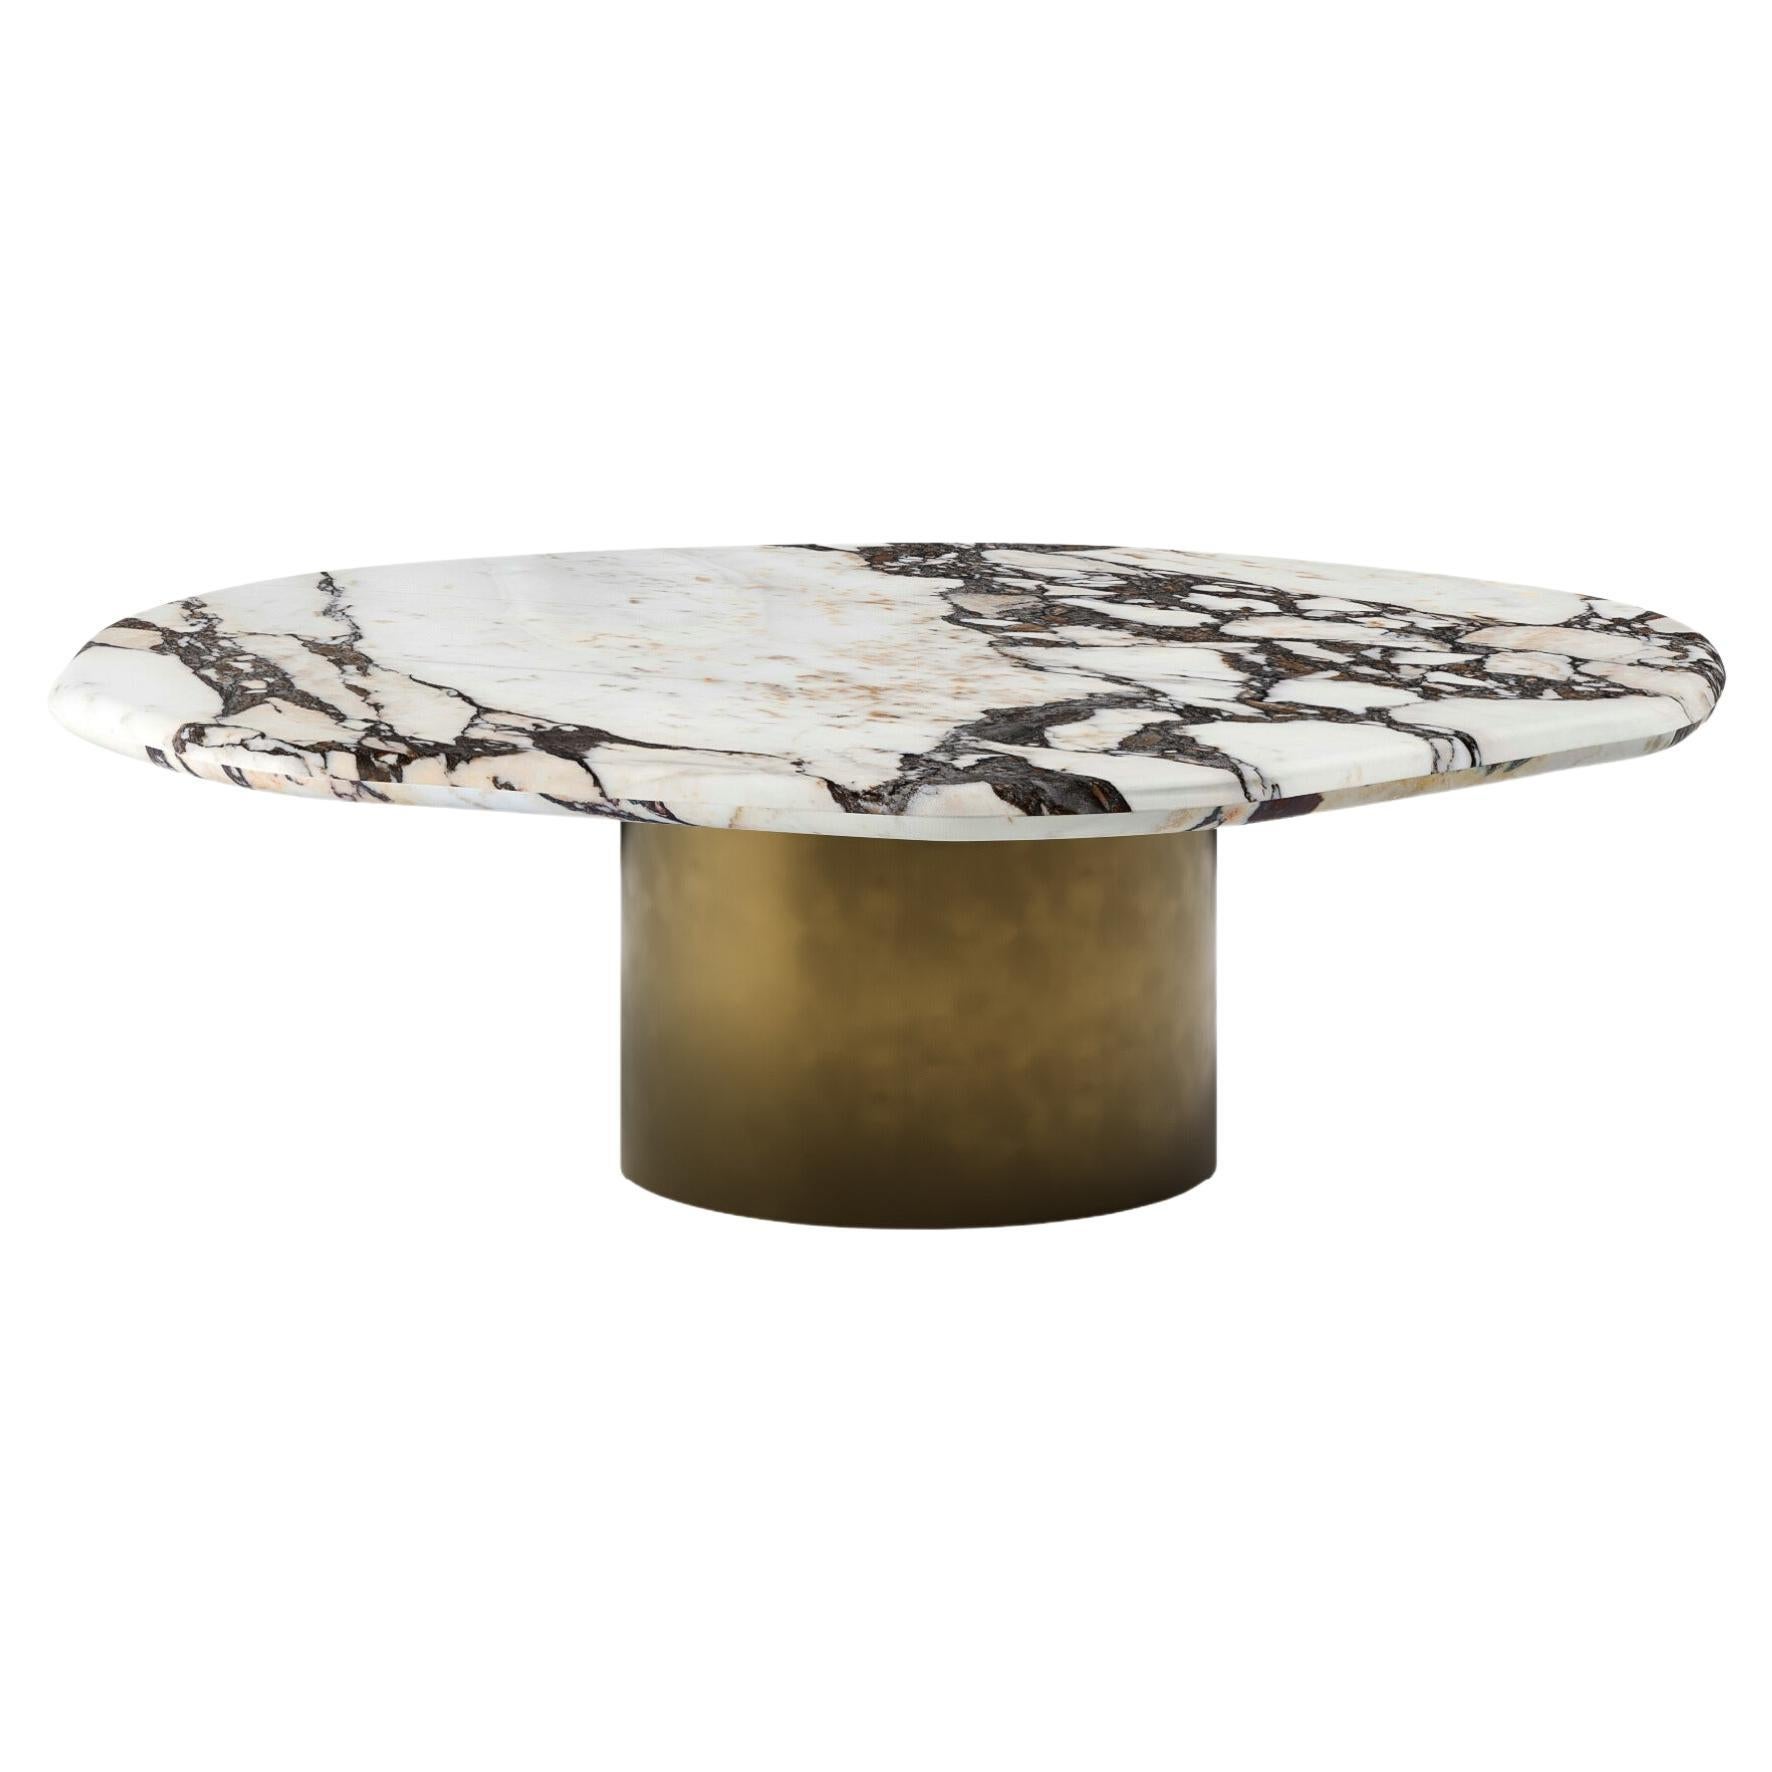 FORM(LA) Lago Round Coffee Table 36”L x 36”W x 14”H Viola Marble & Bronze For Sale